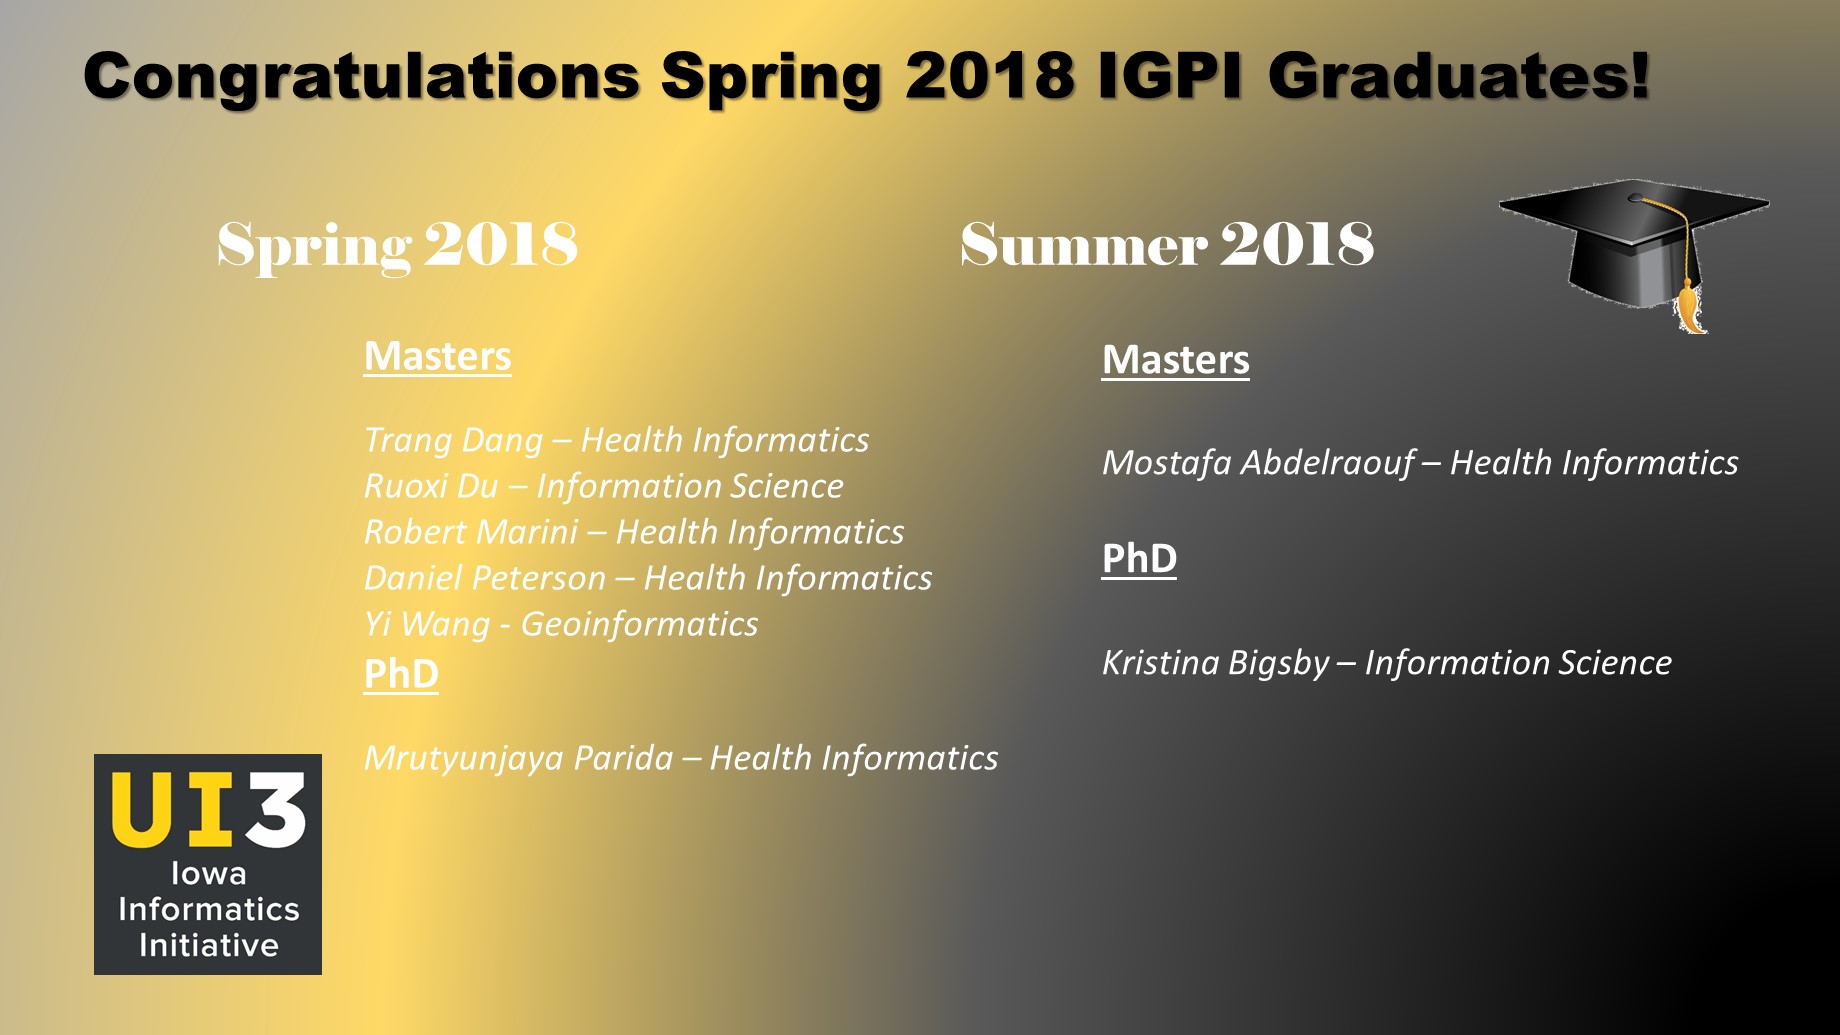 IGPI Graduates Spring 2018 and Summer 2018!